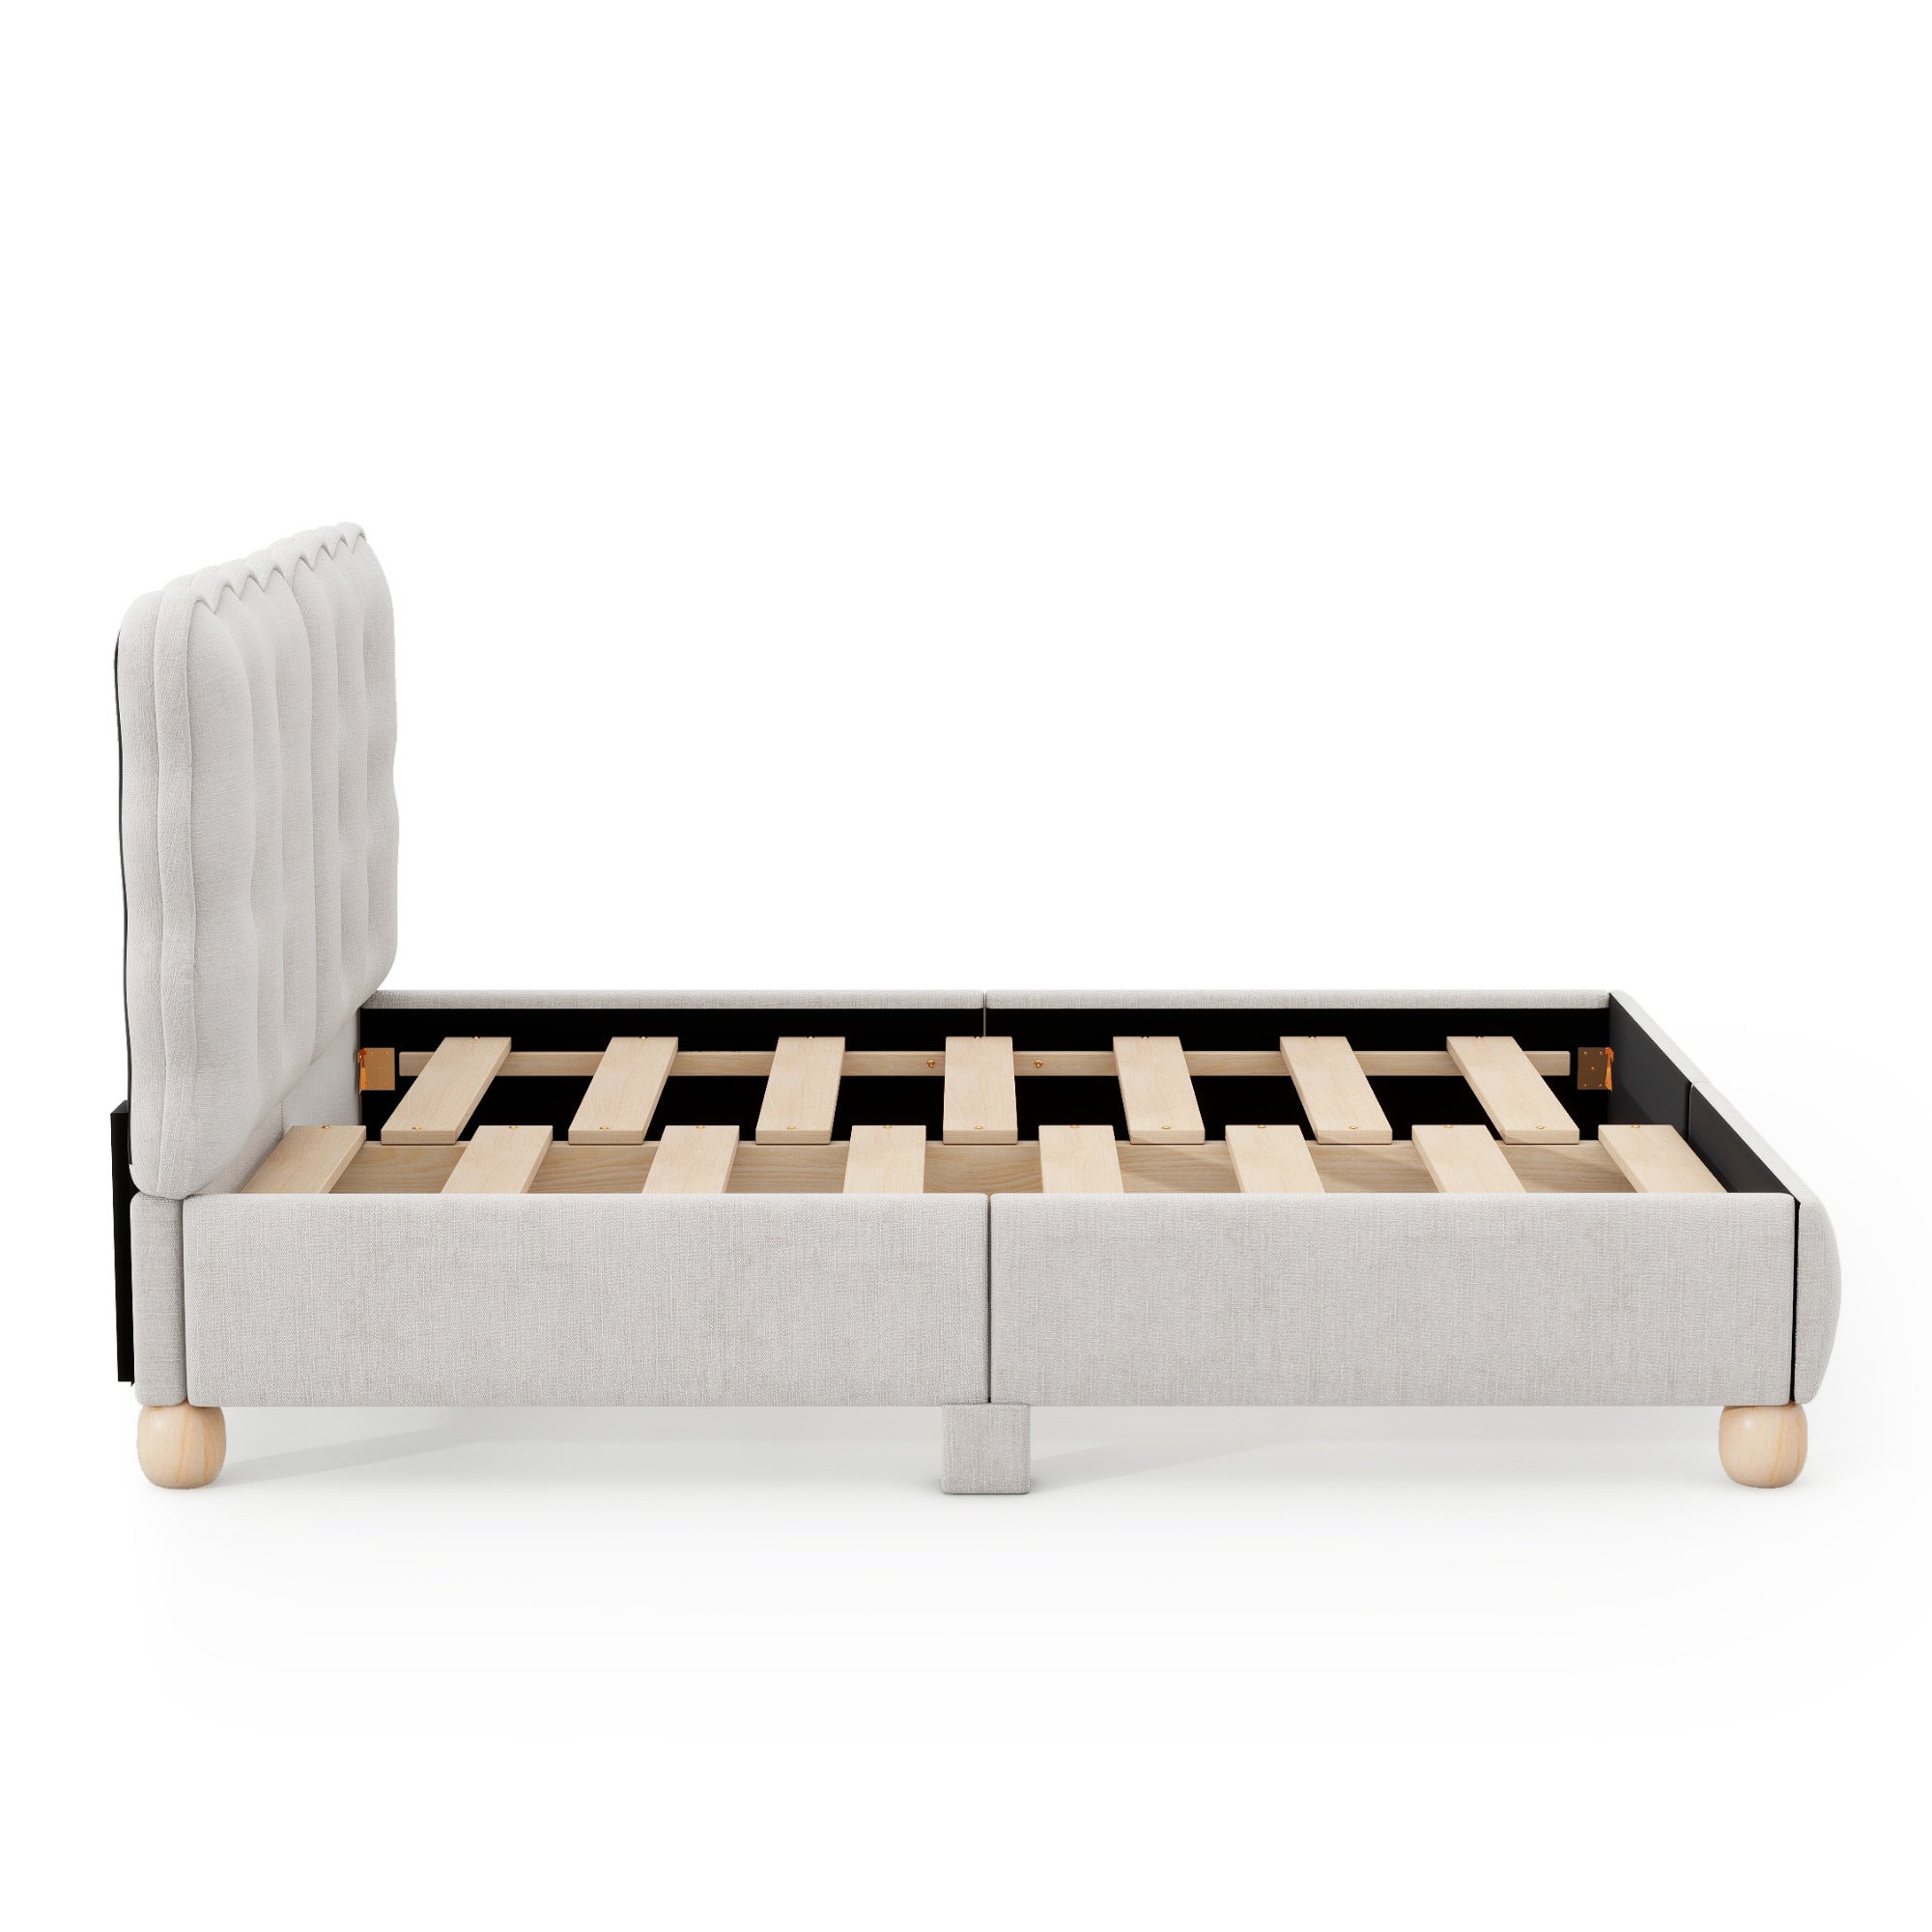 Full Size Upholstered Platform Bed with Support beige-upholstered